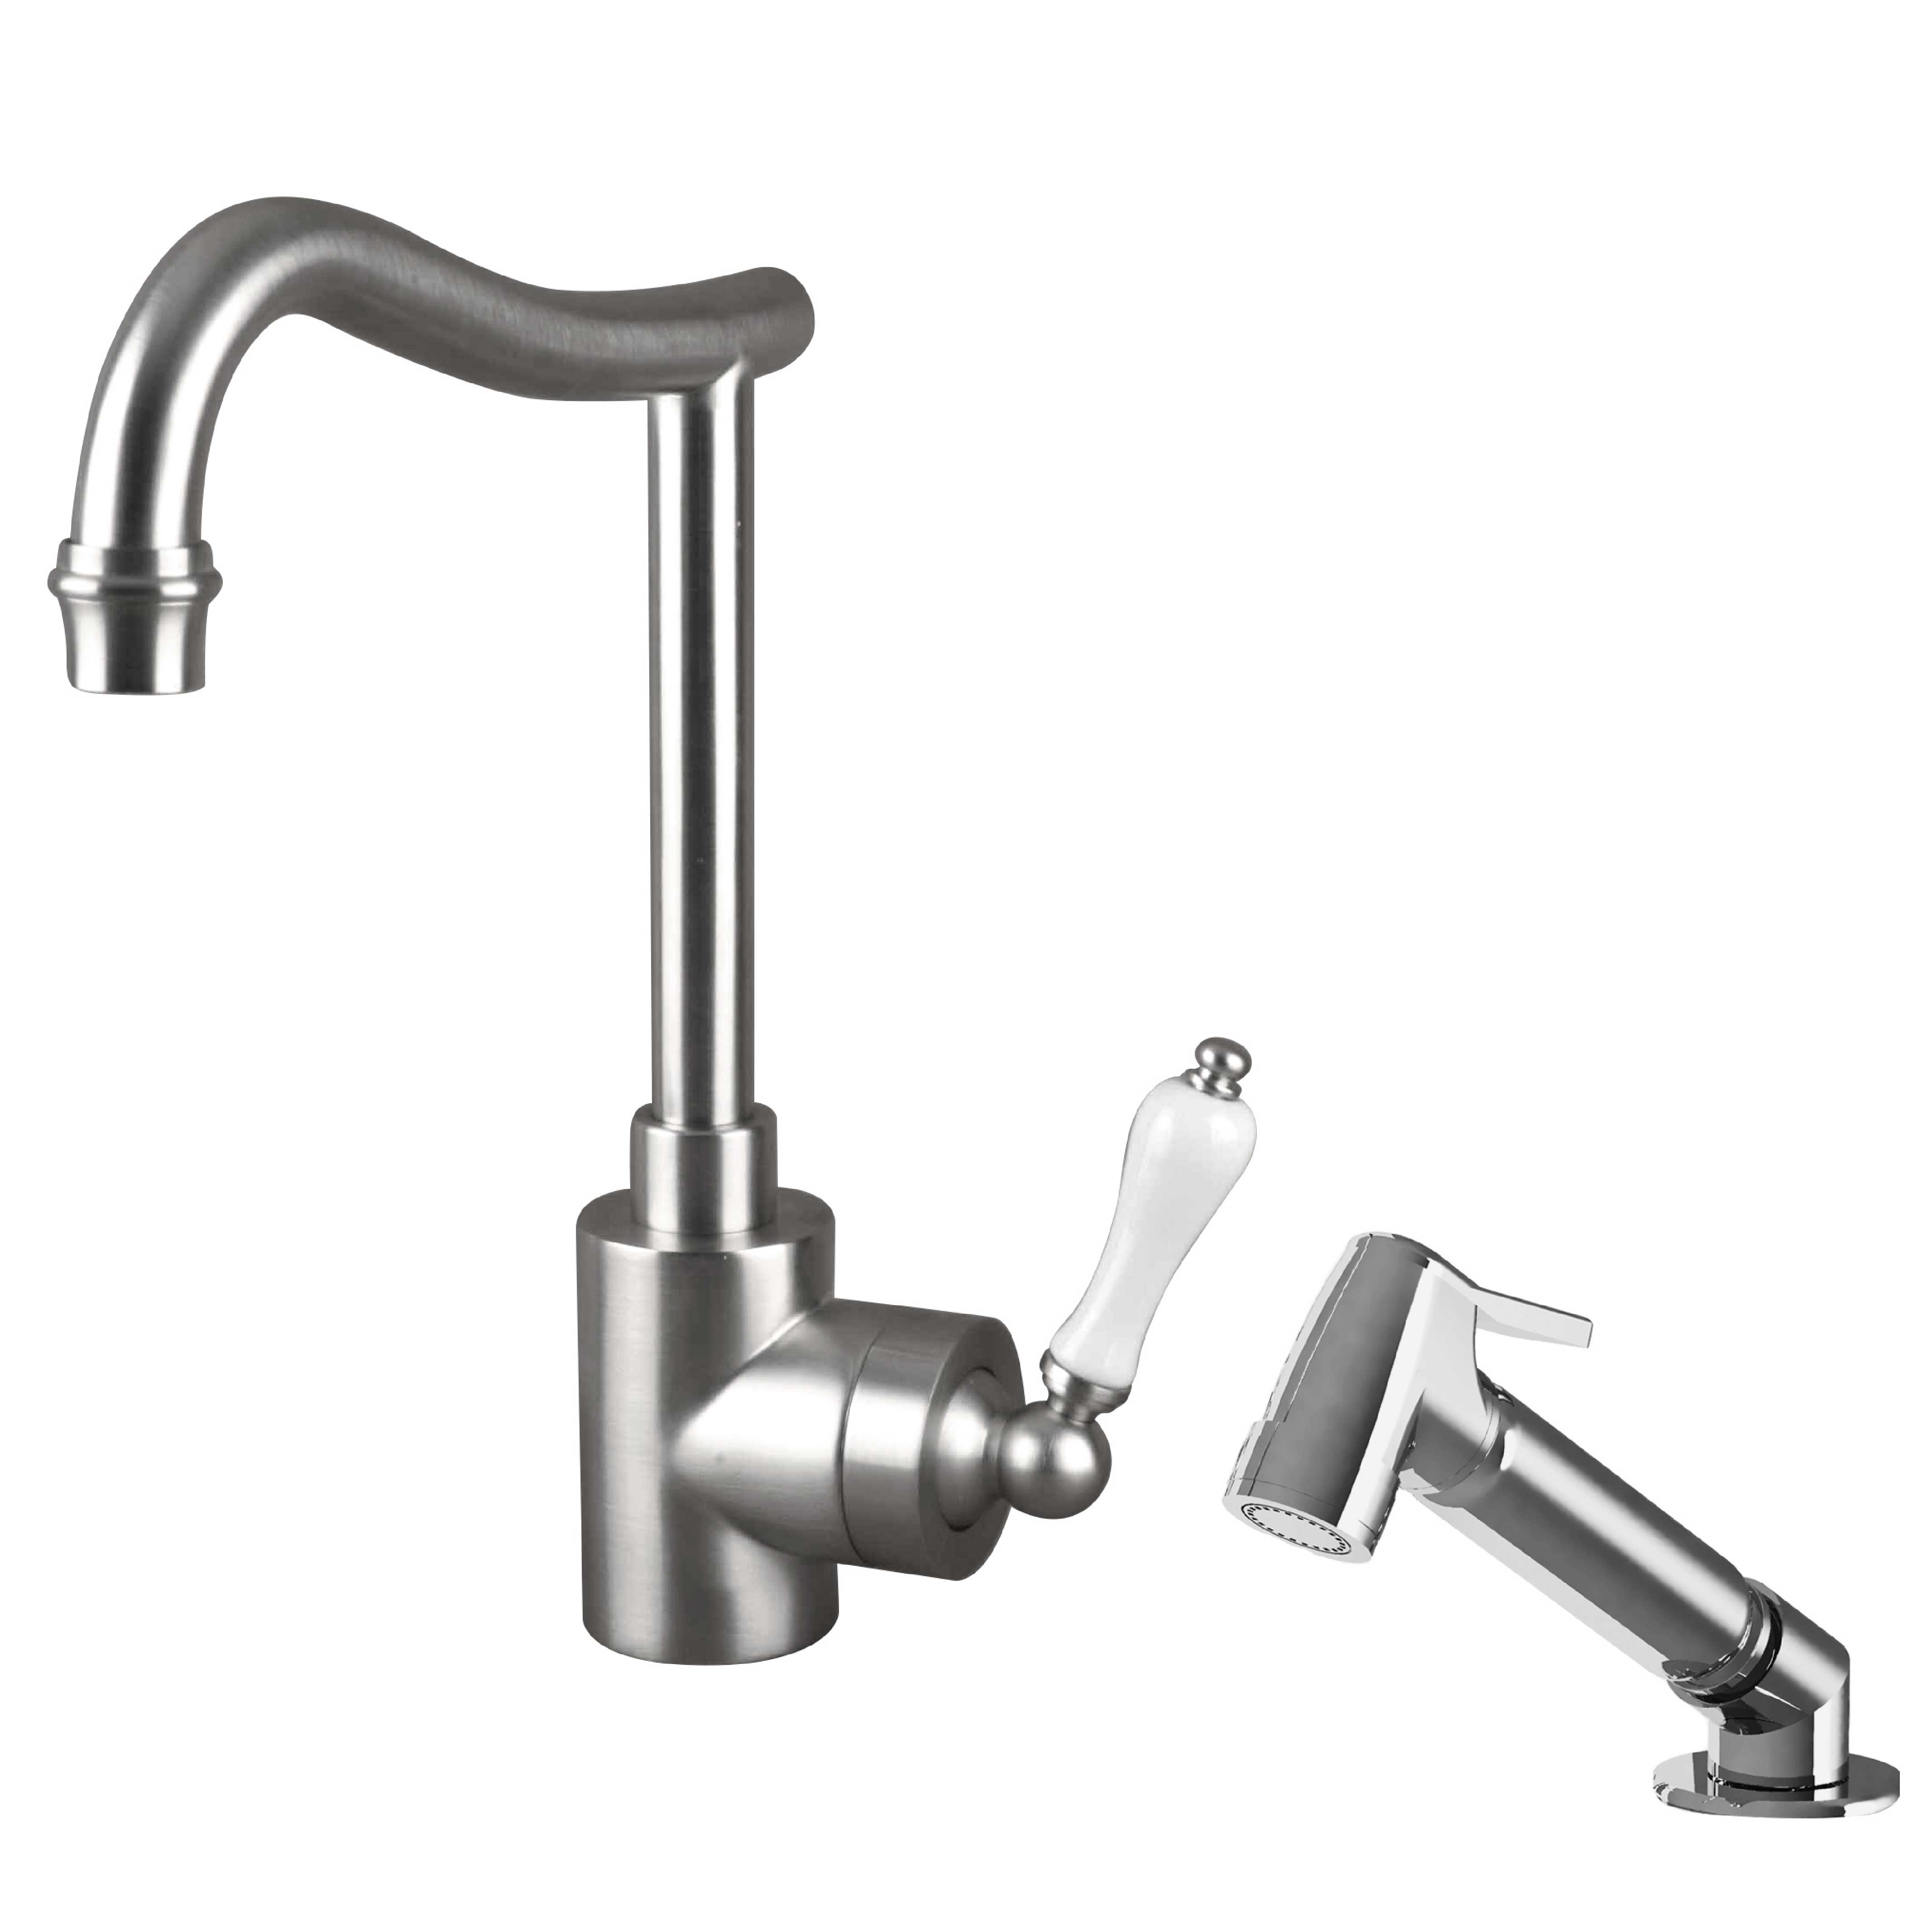 MKC-1BT6S Single-hole lever kitchen mixer & handspray